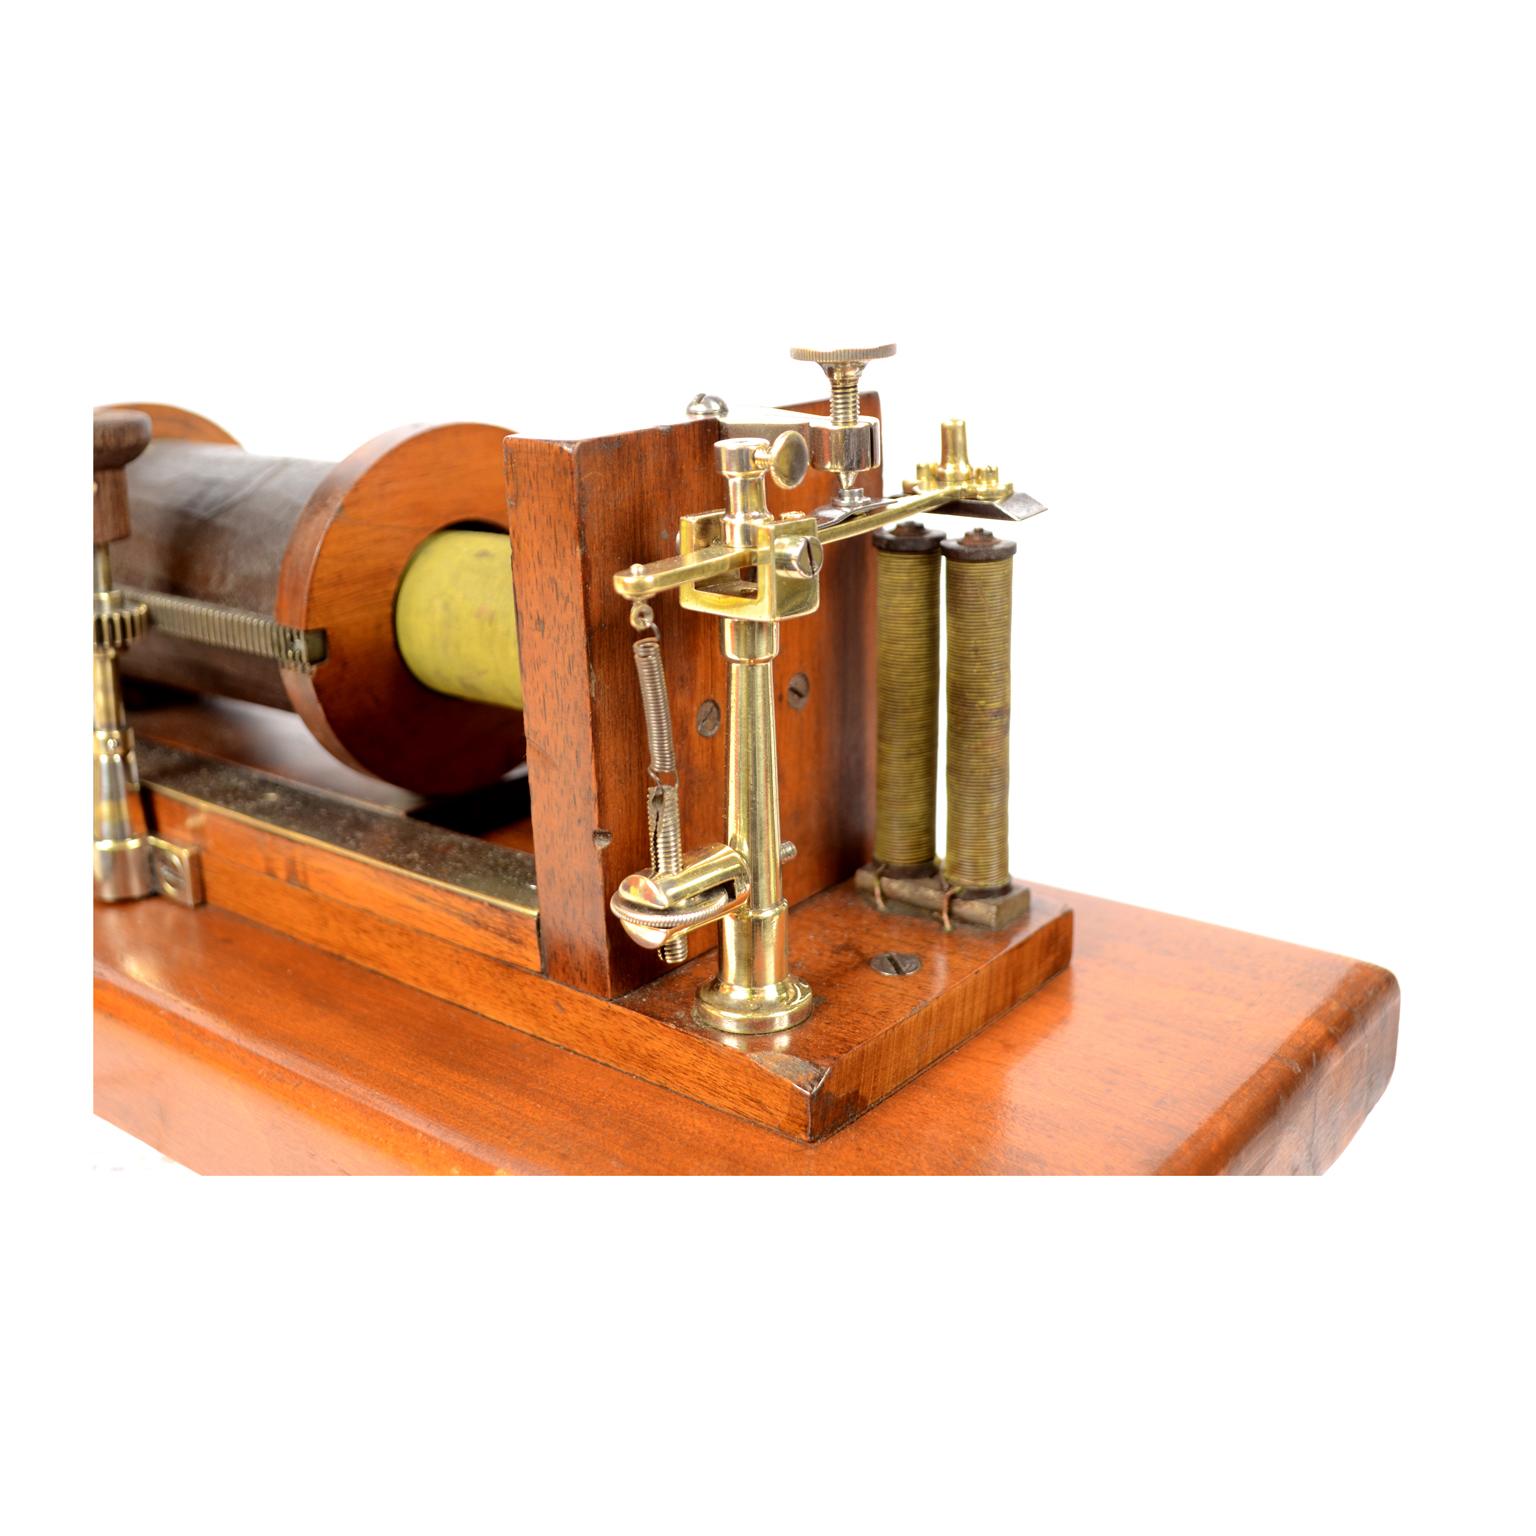 Induction Coil or Sled Antique Scientific Instrument by Du Bois Reymond 1870  For Sale 5